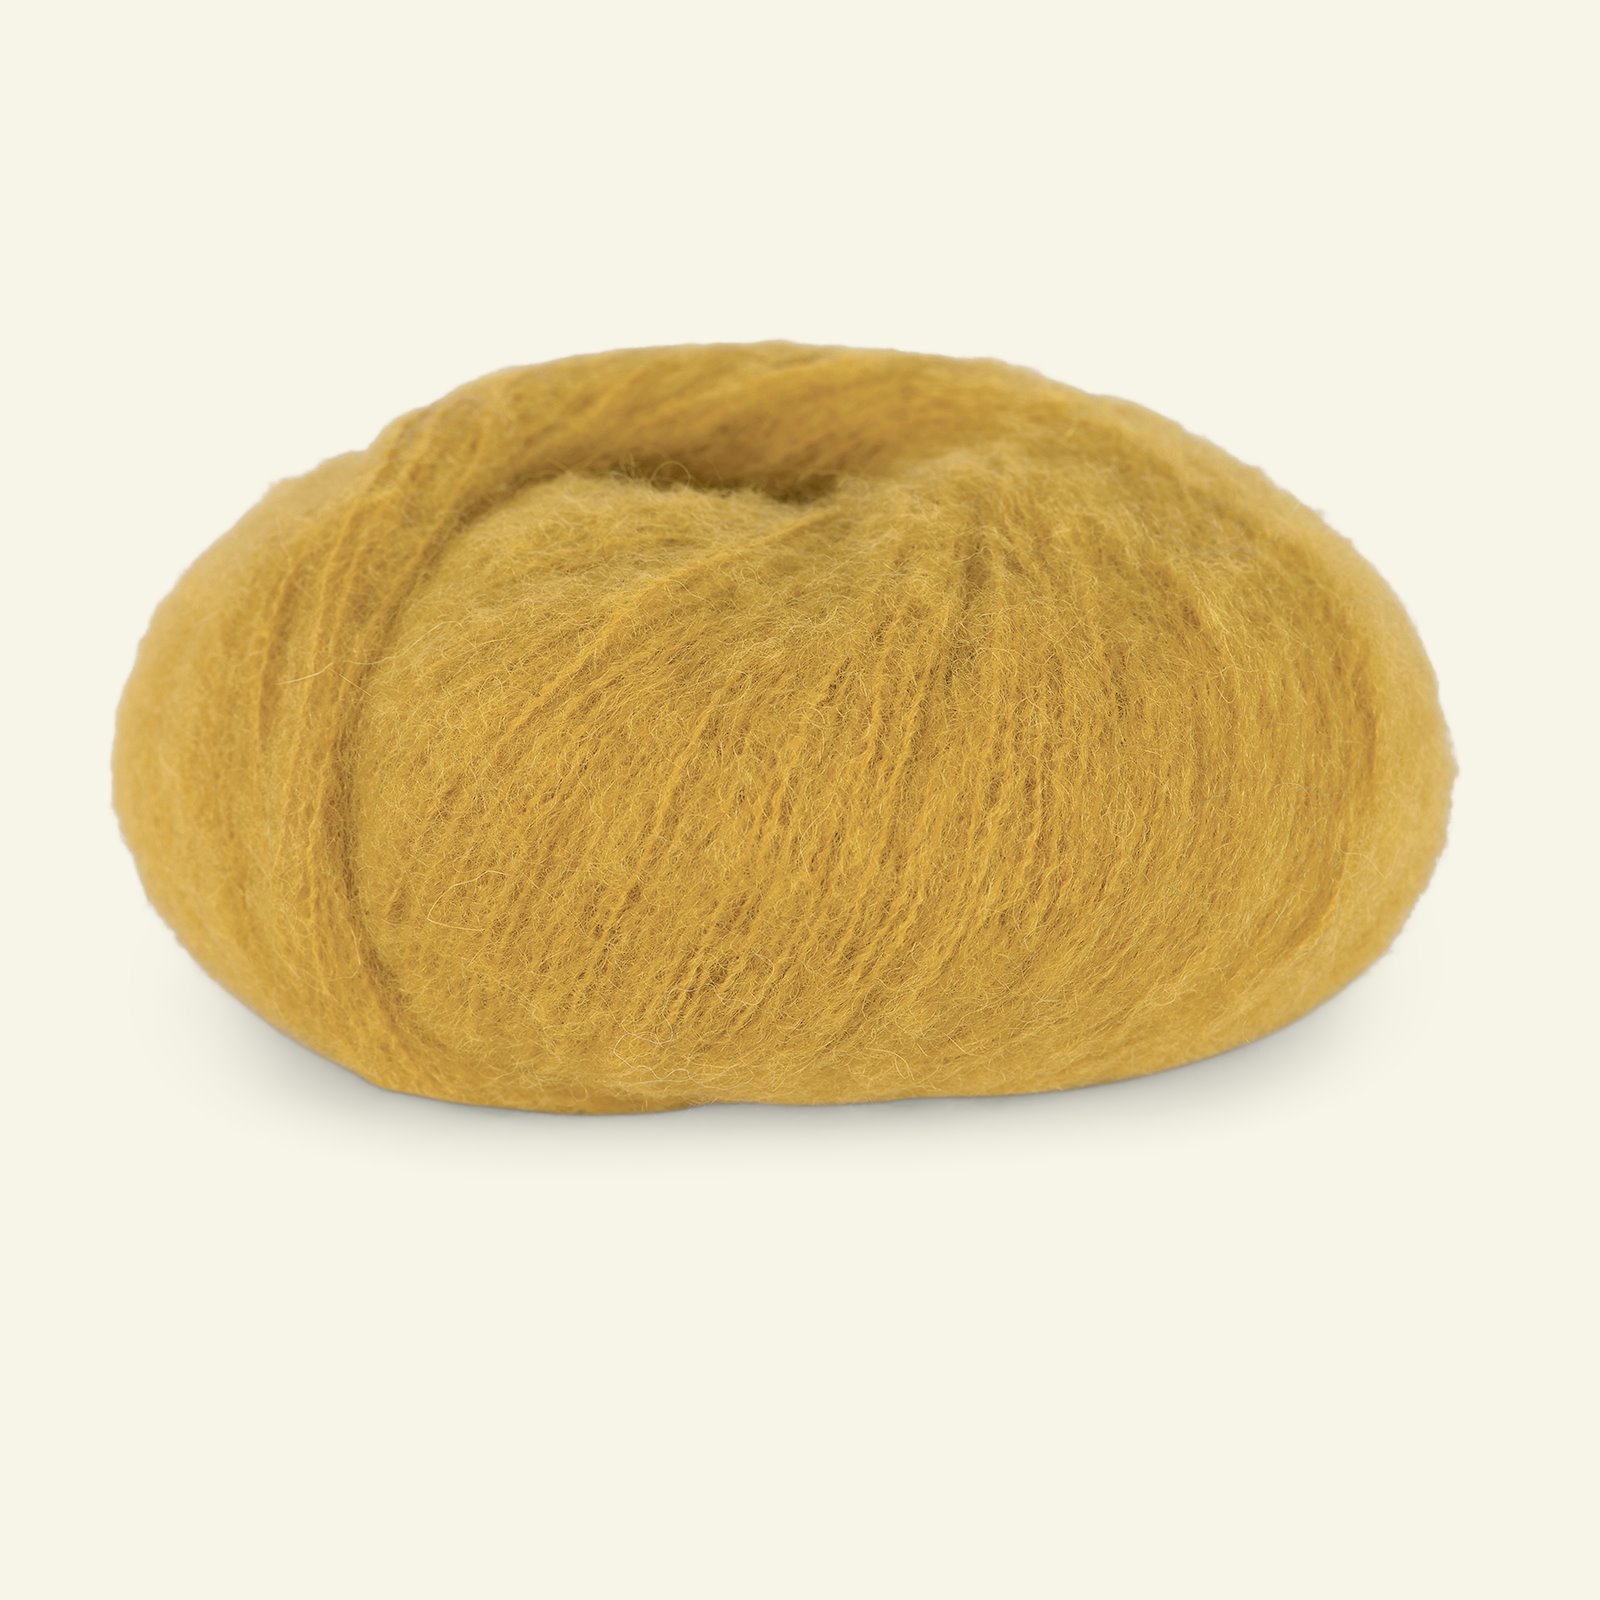 Du Store Alpakka, børsted alpacagarn "Faerytale", majs gul (747) 90000590_pack_b